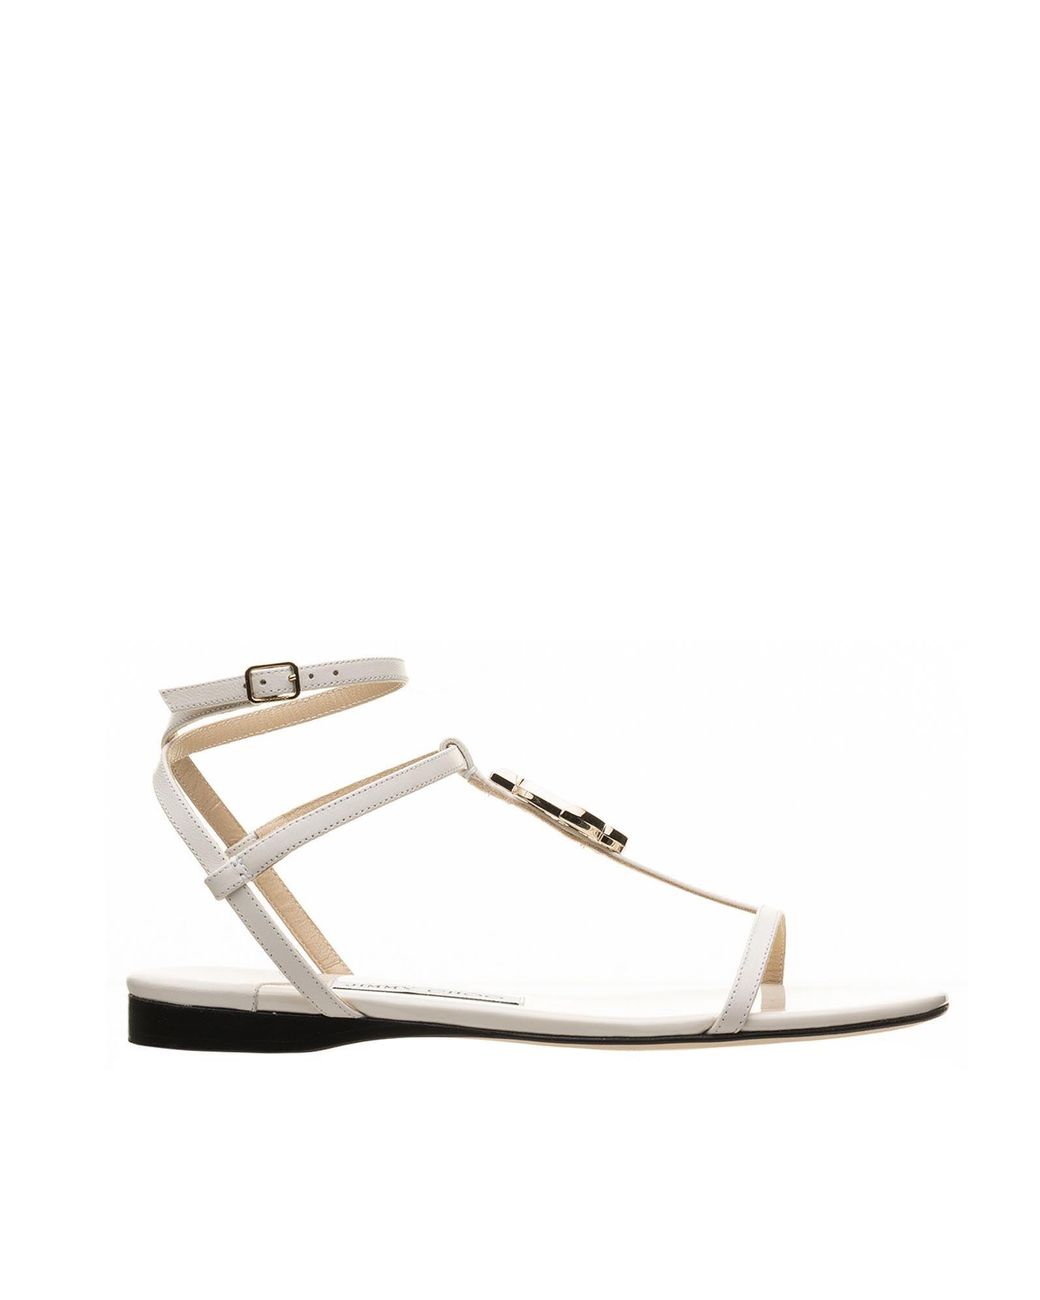 Jimmy Choo Flat Sandals in White - Lyst